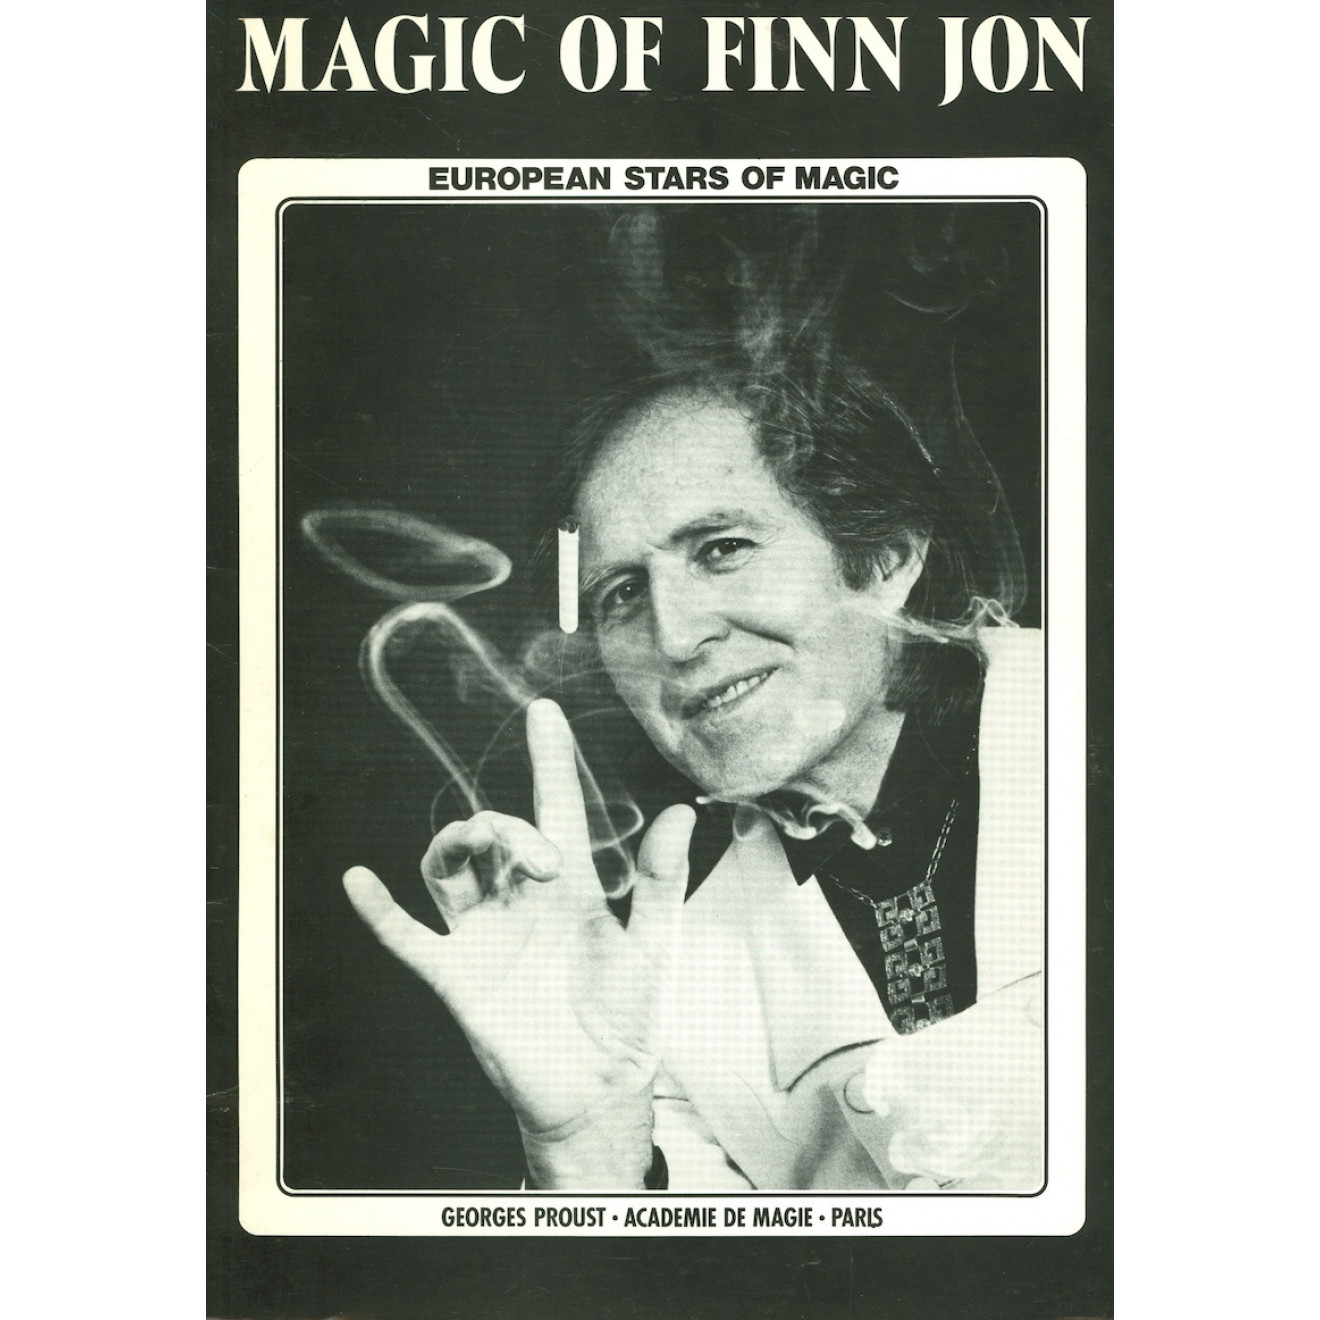 European Stars of Magic: Magic of Finn Jon